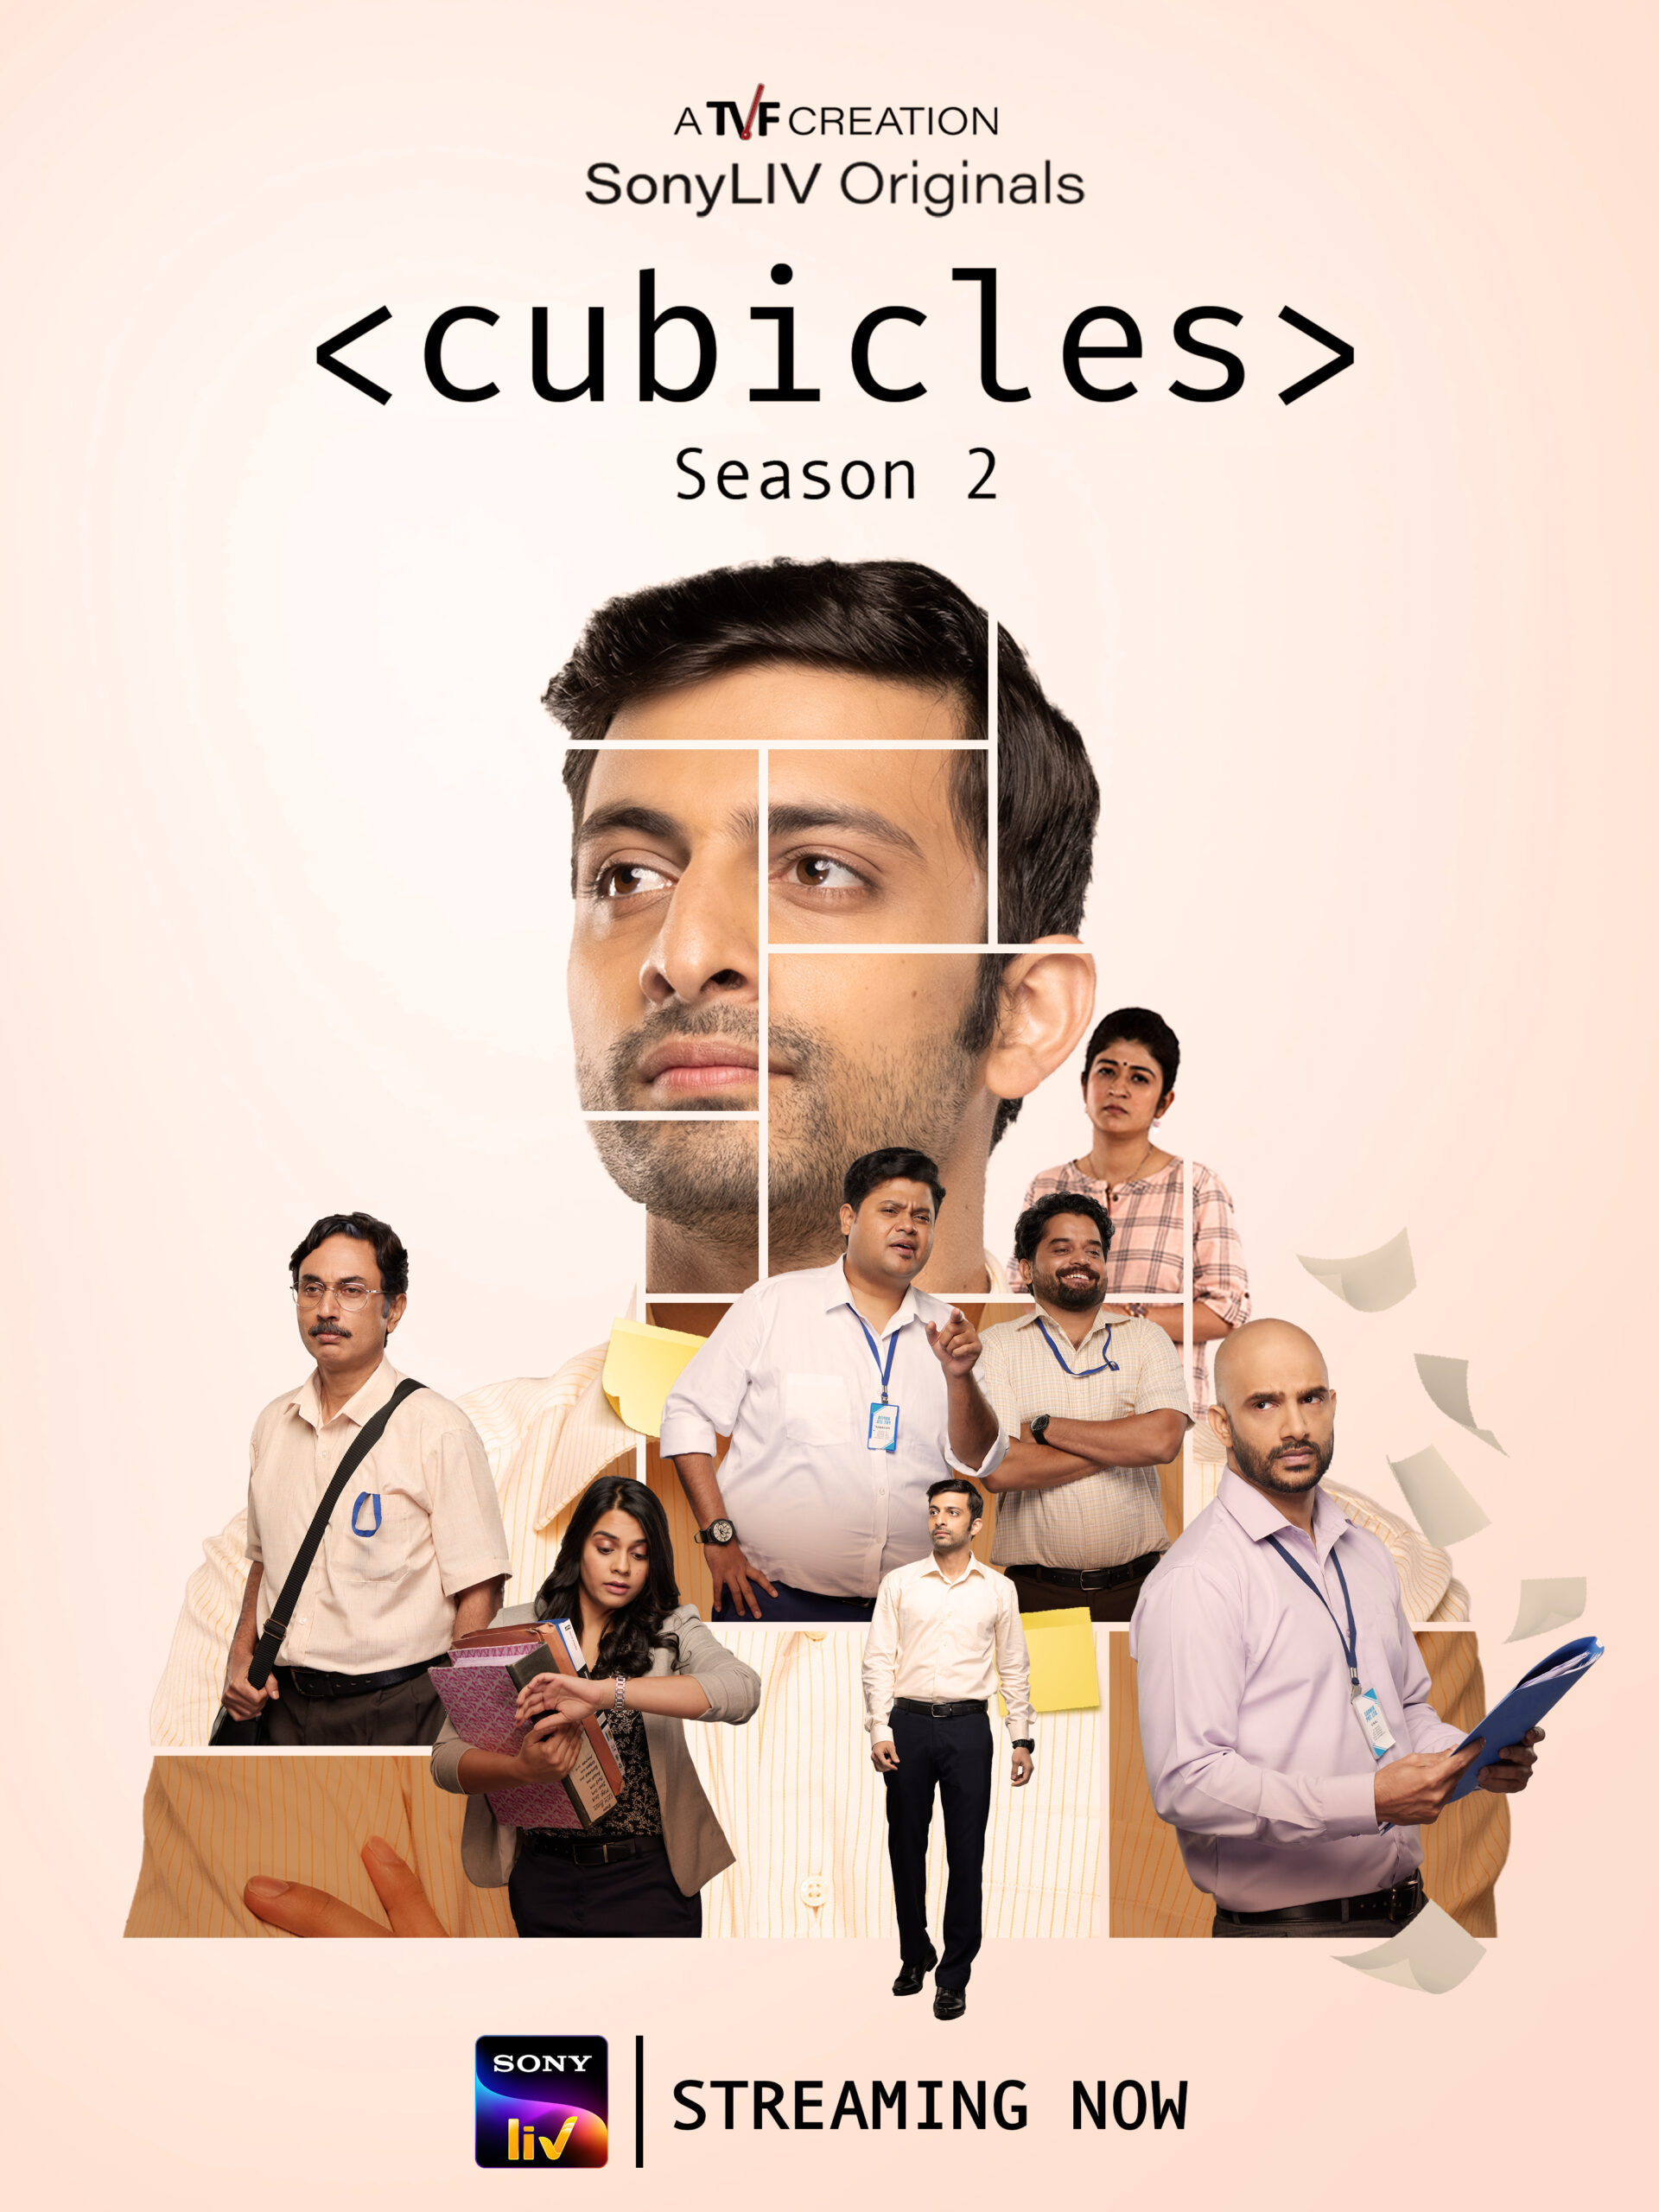 Cubicles Season 3 Episode 1 Release Date